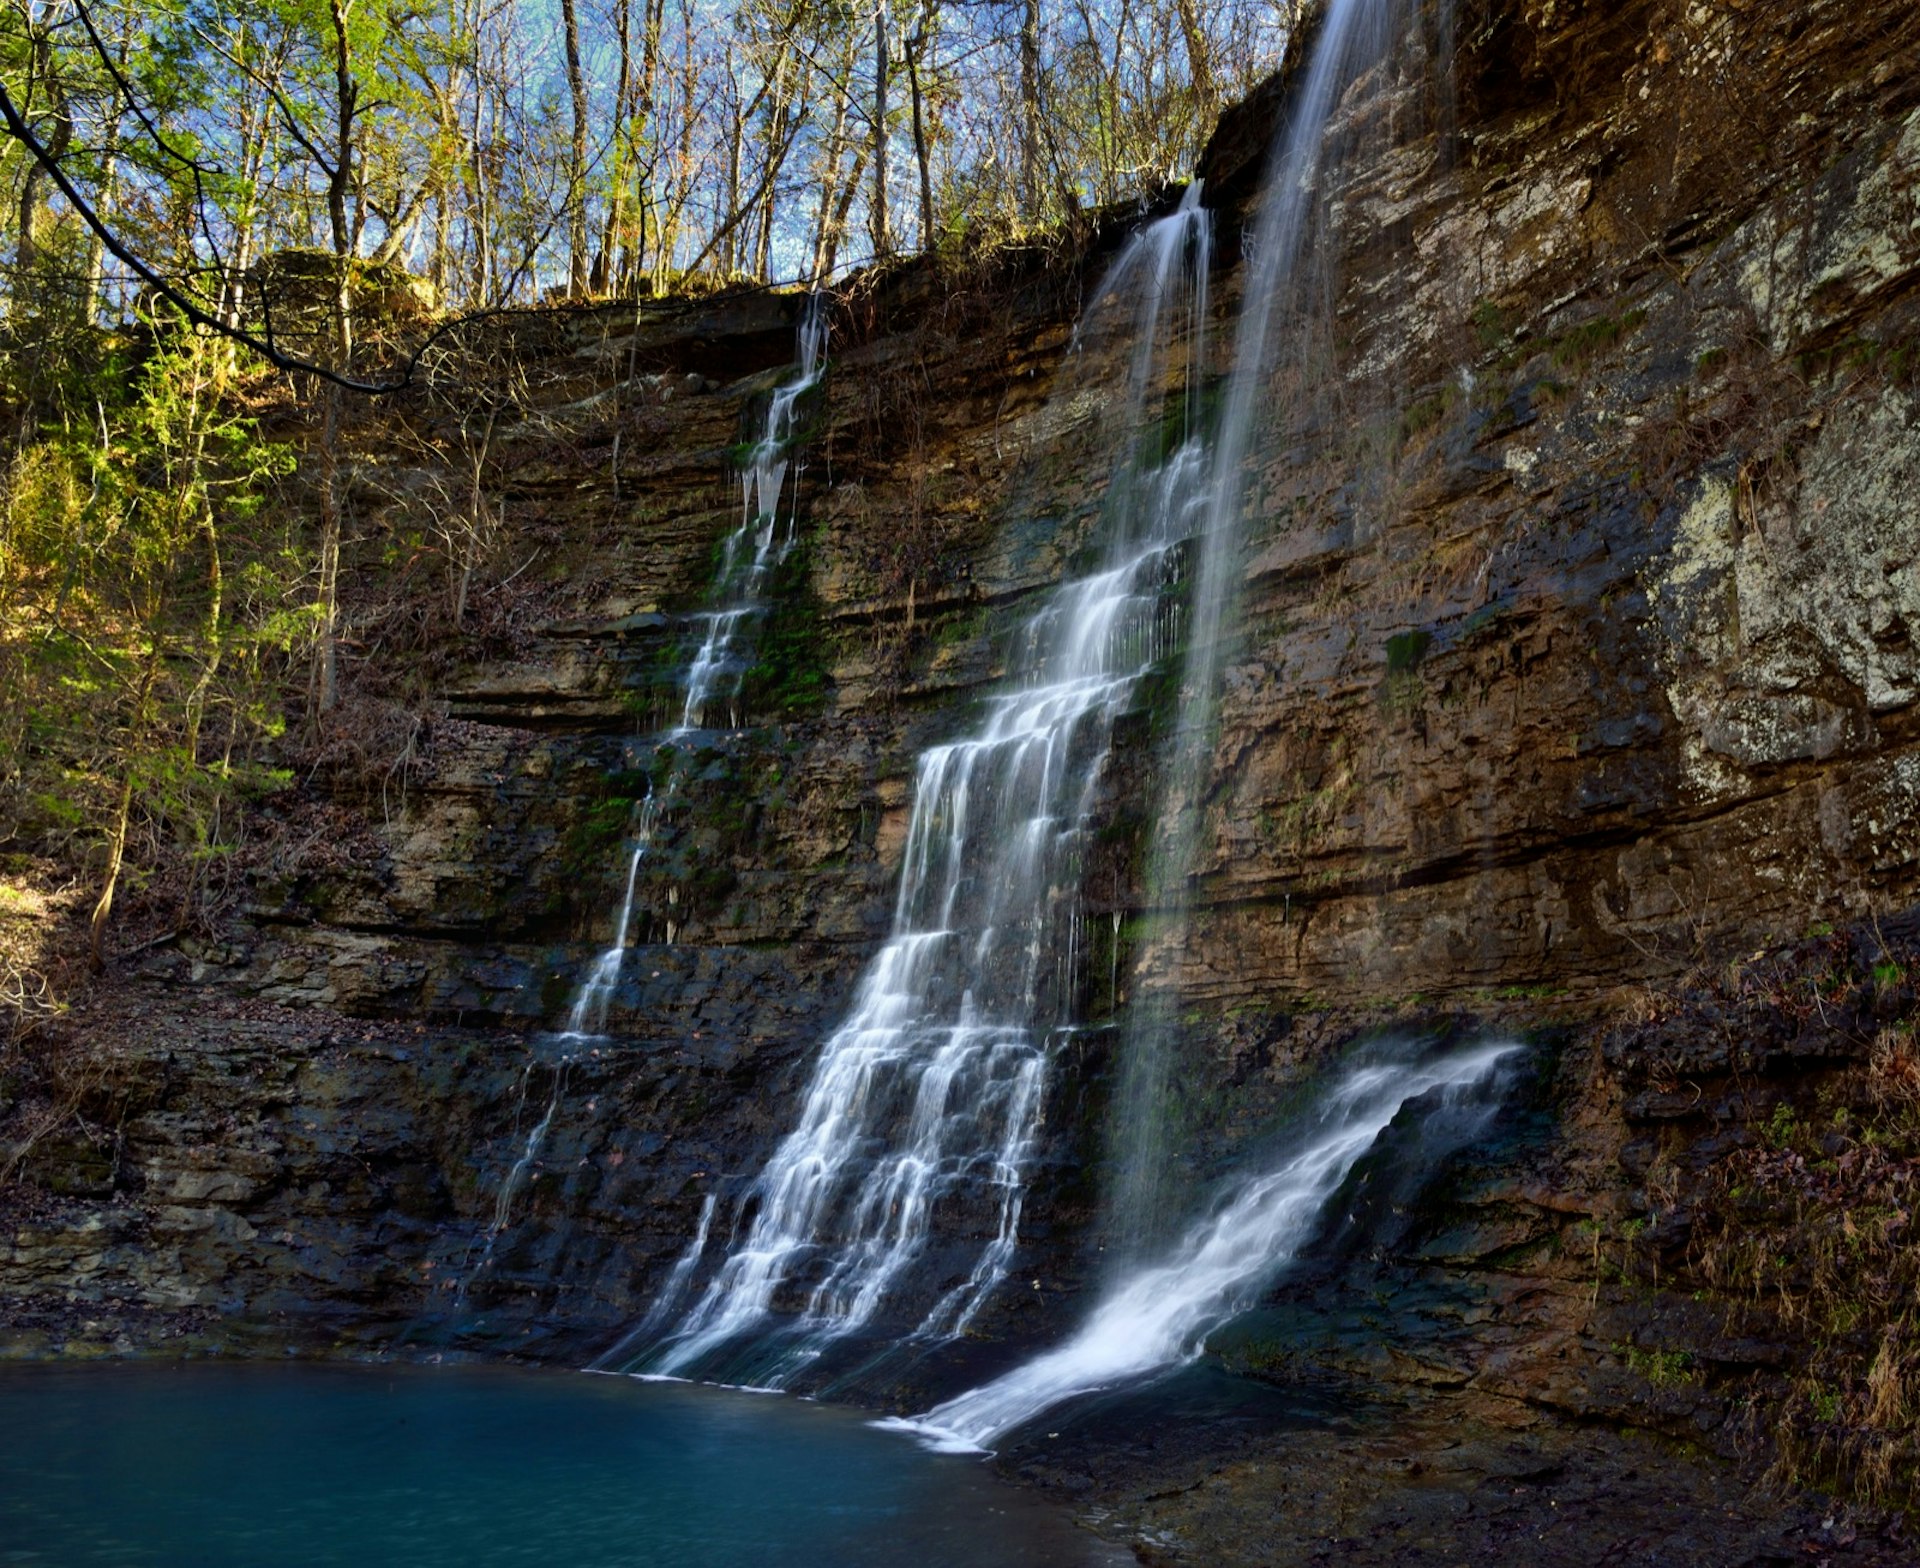 A waterfall trickles across dark rock into a pool below